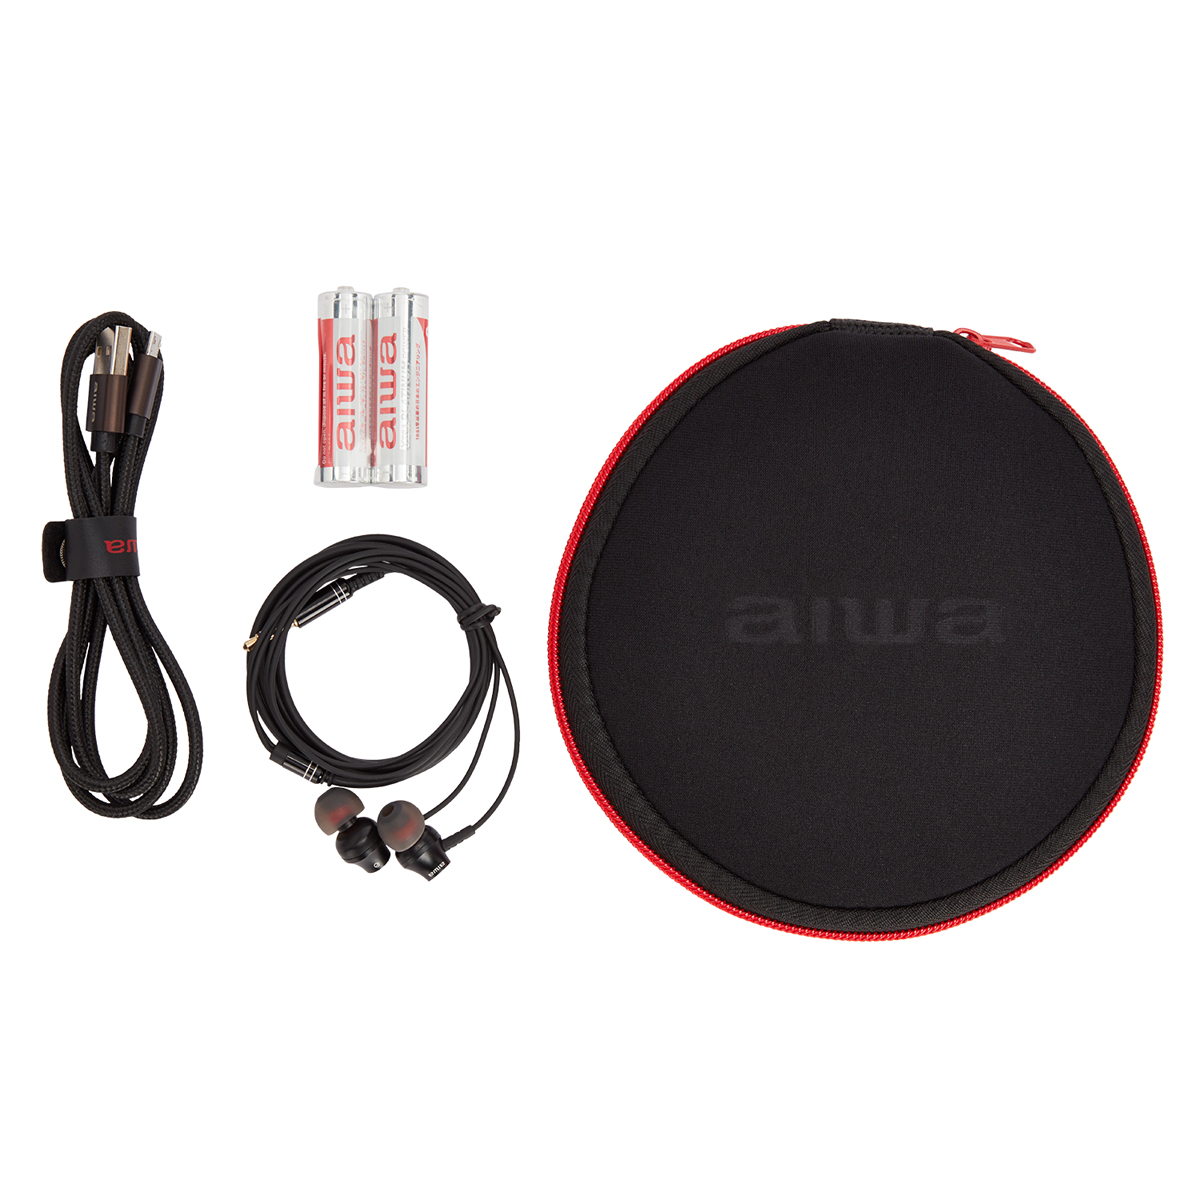 AIWA PCD-810RD MB, (0 Rot) CD-Player tragbarer